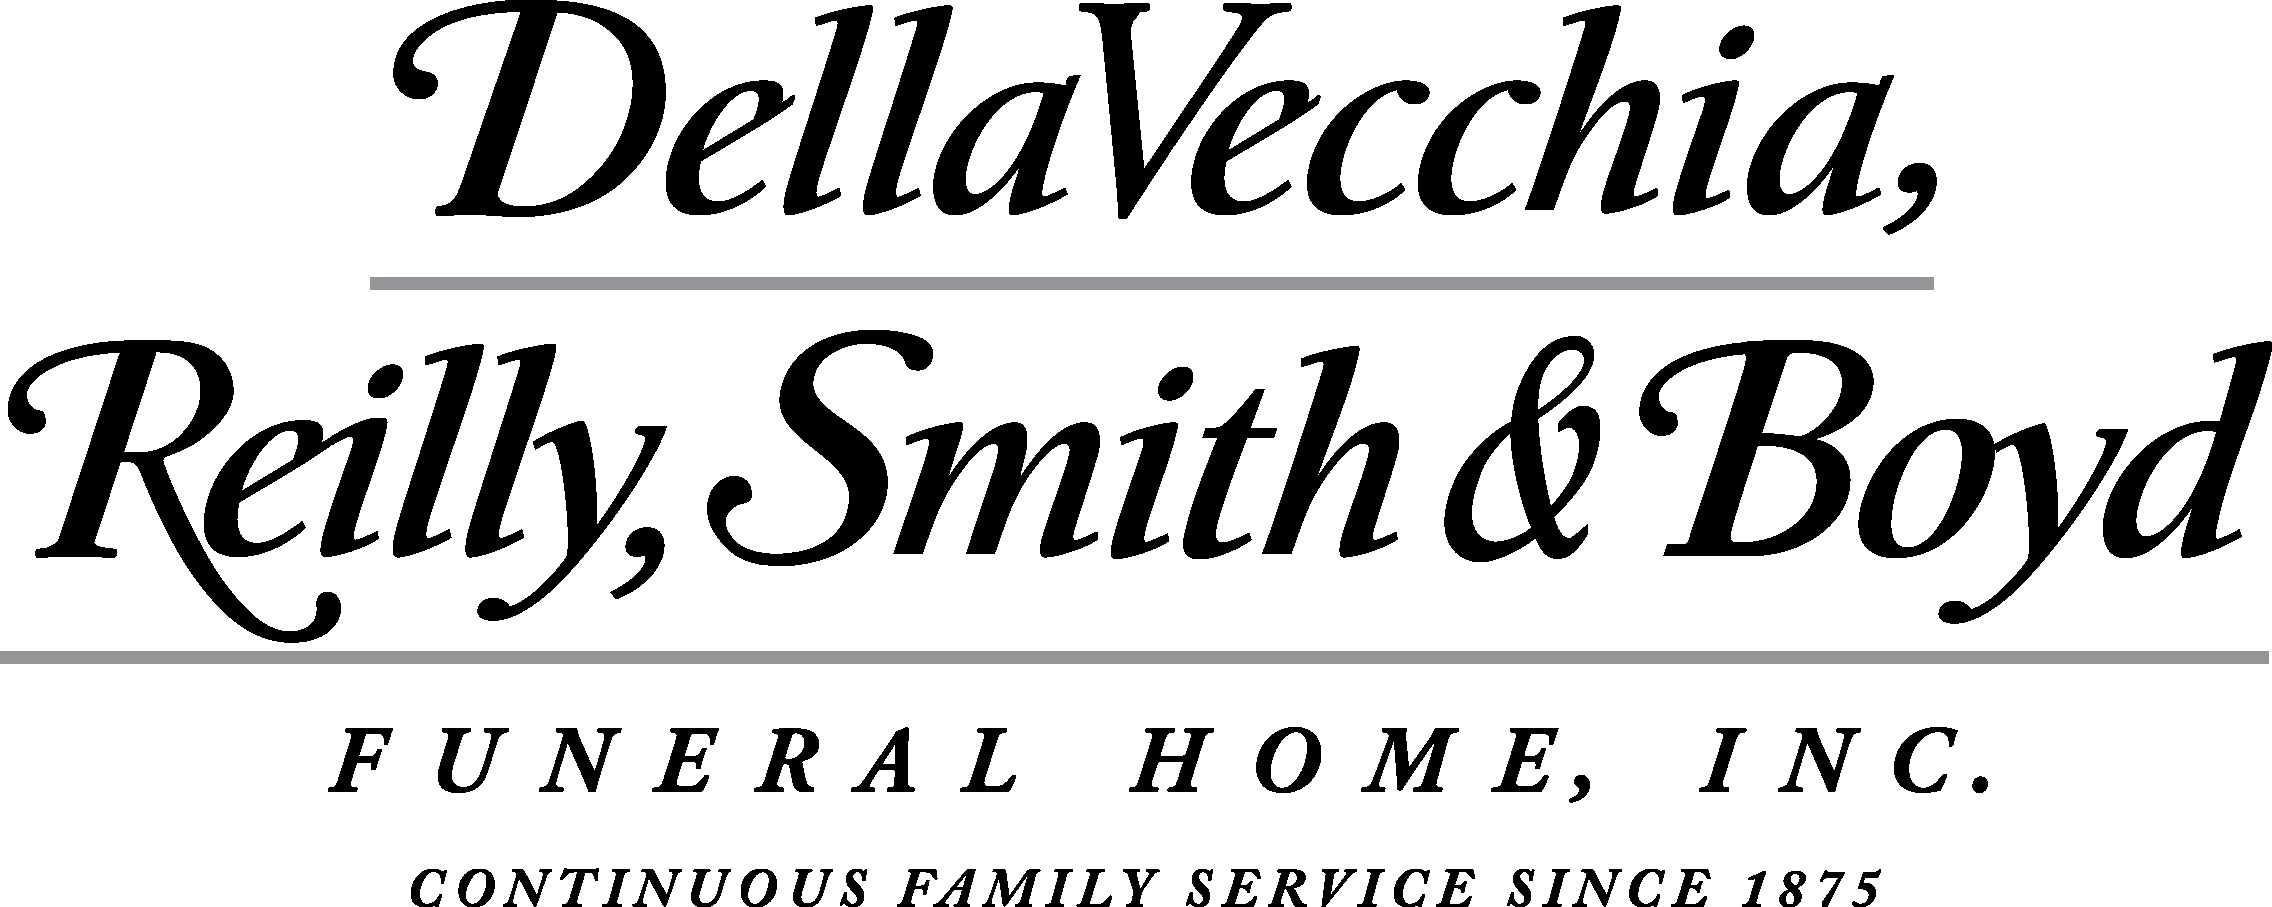 DellaVecchia, Reilly, Smith & Boyd Funeral Home, Inc.